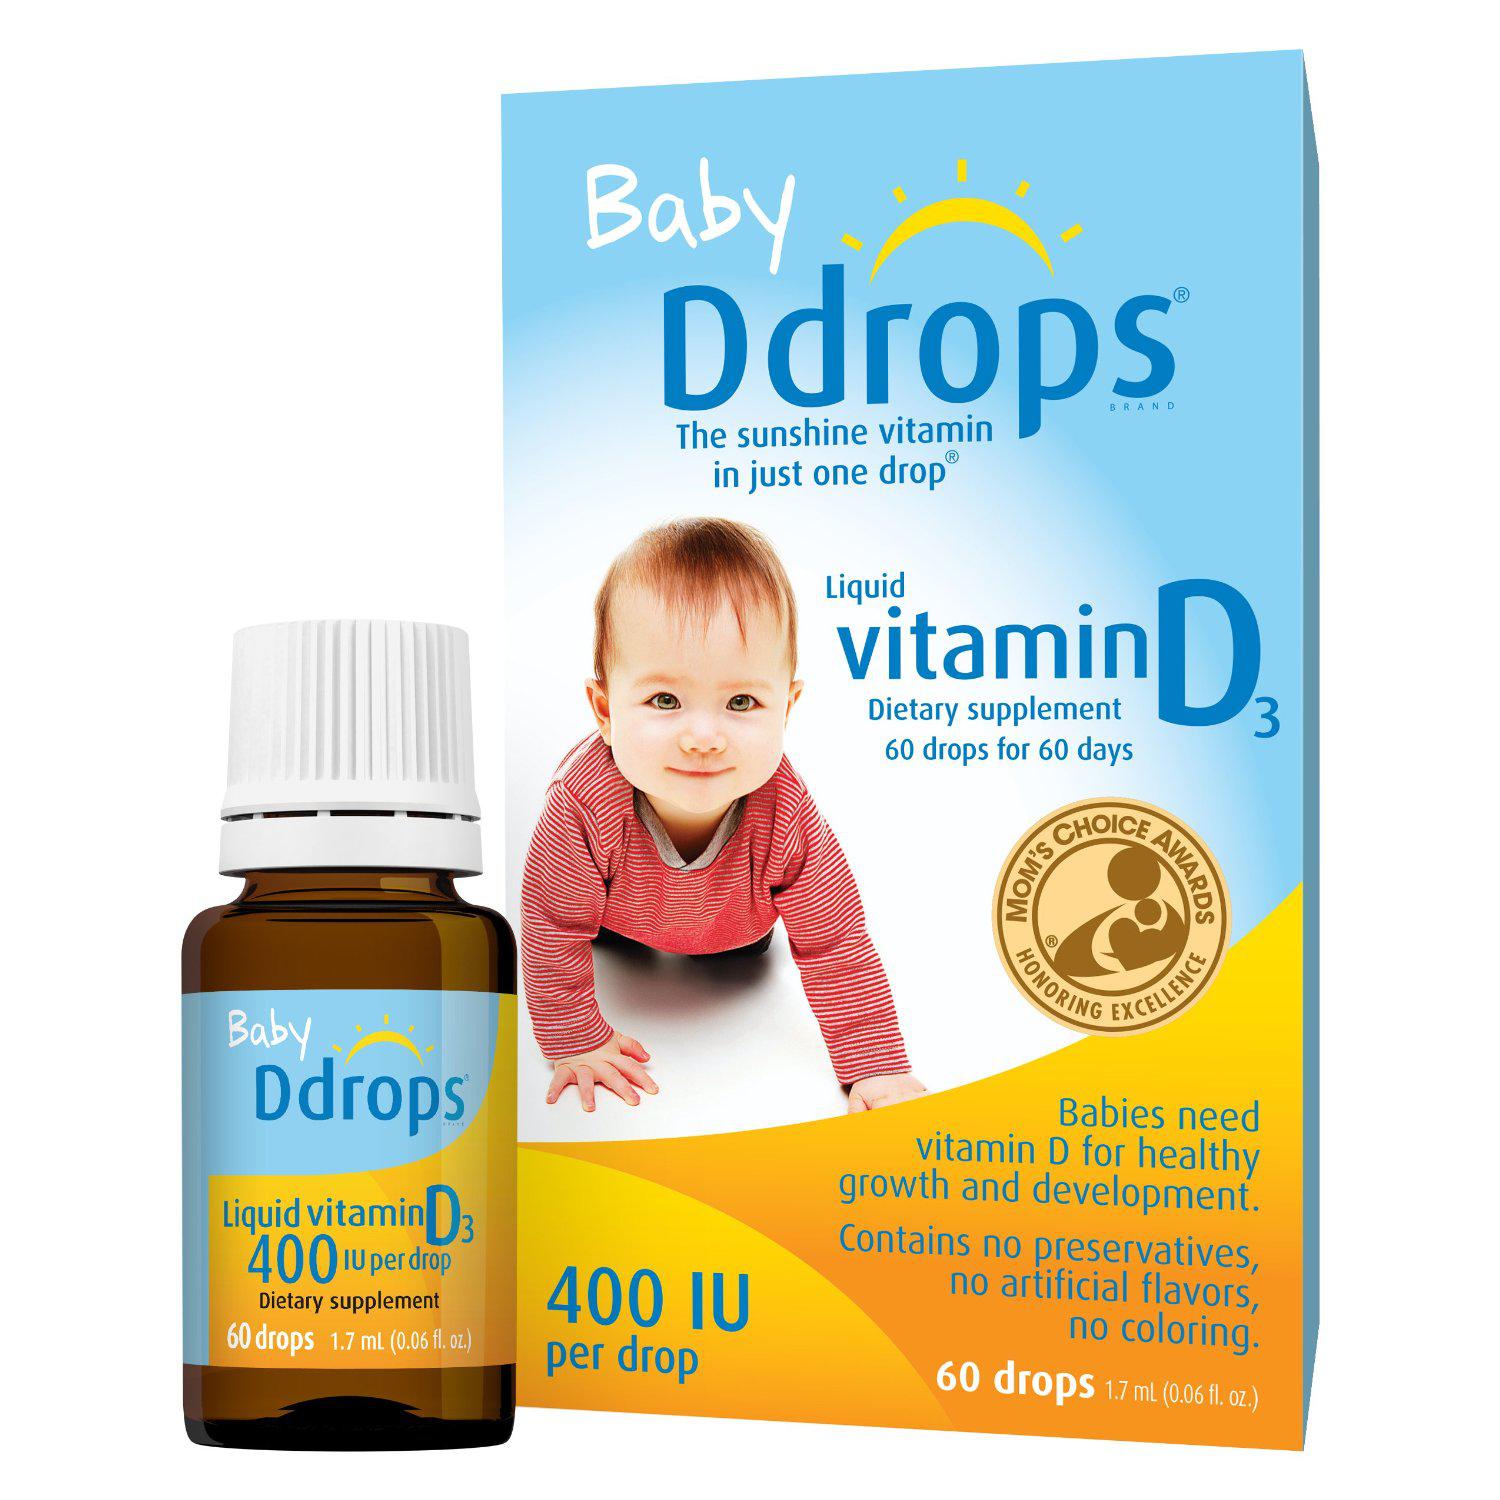 Vitamin D Baby Ddrops